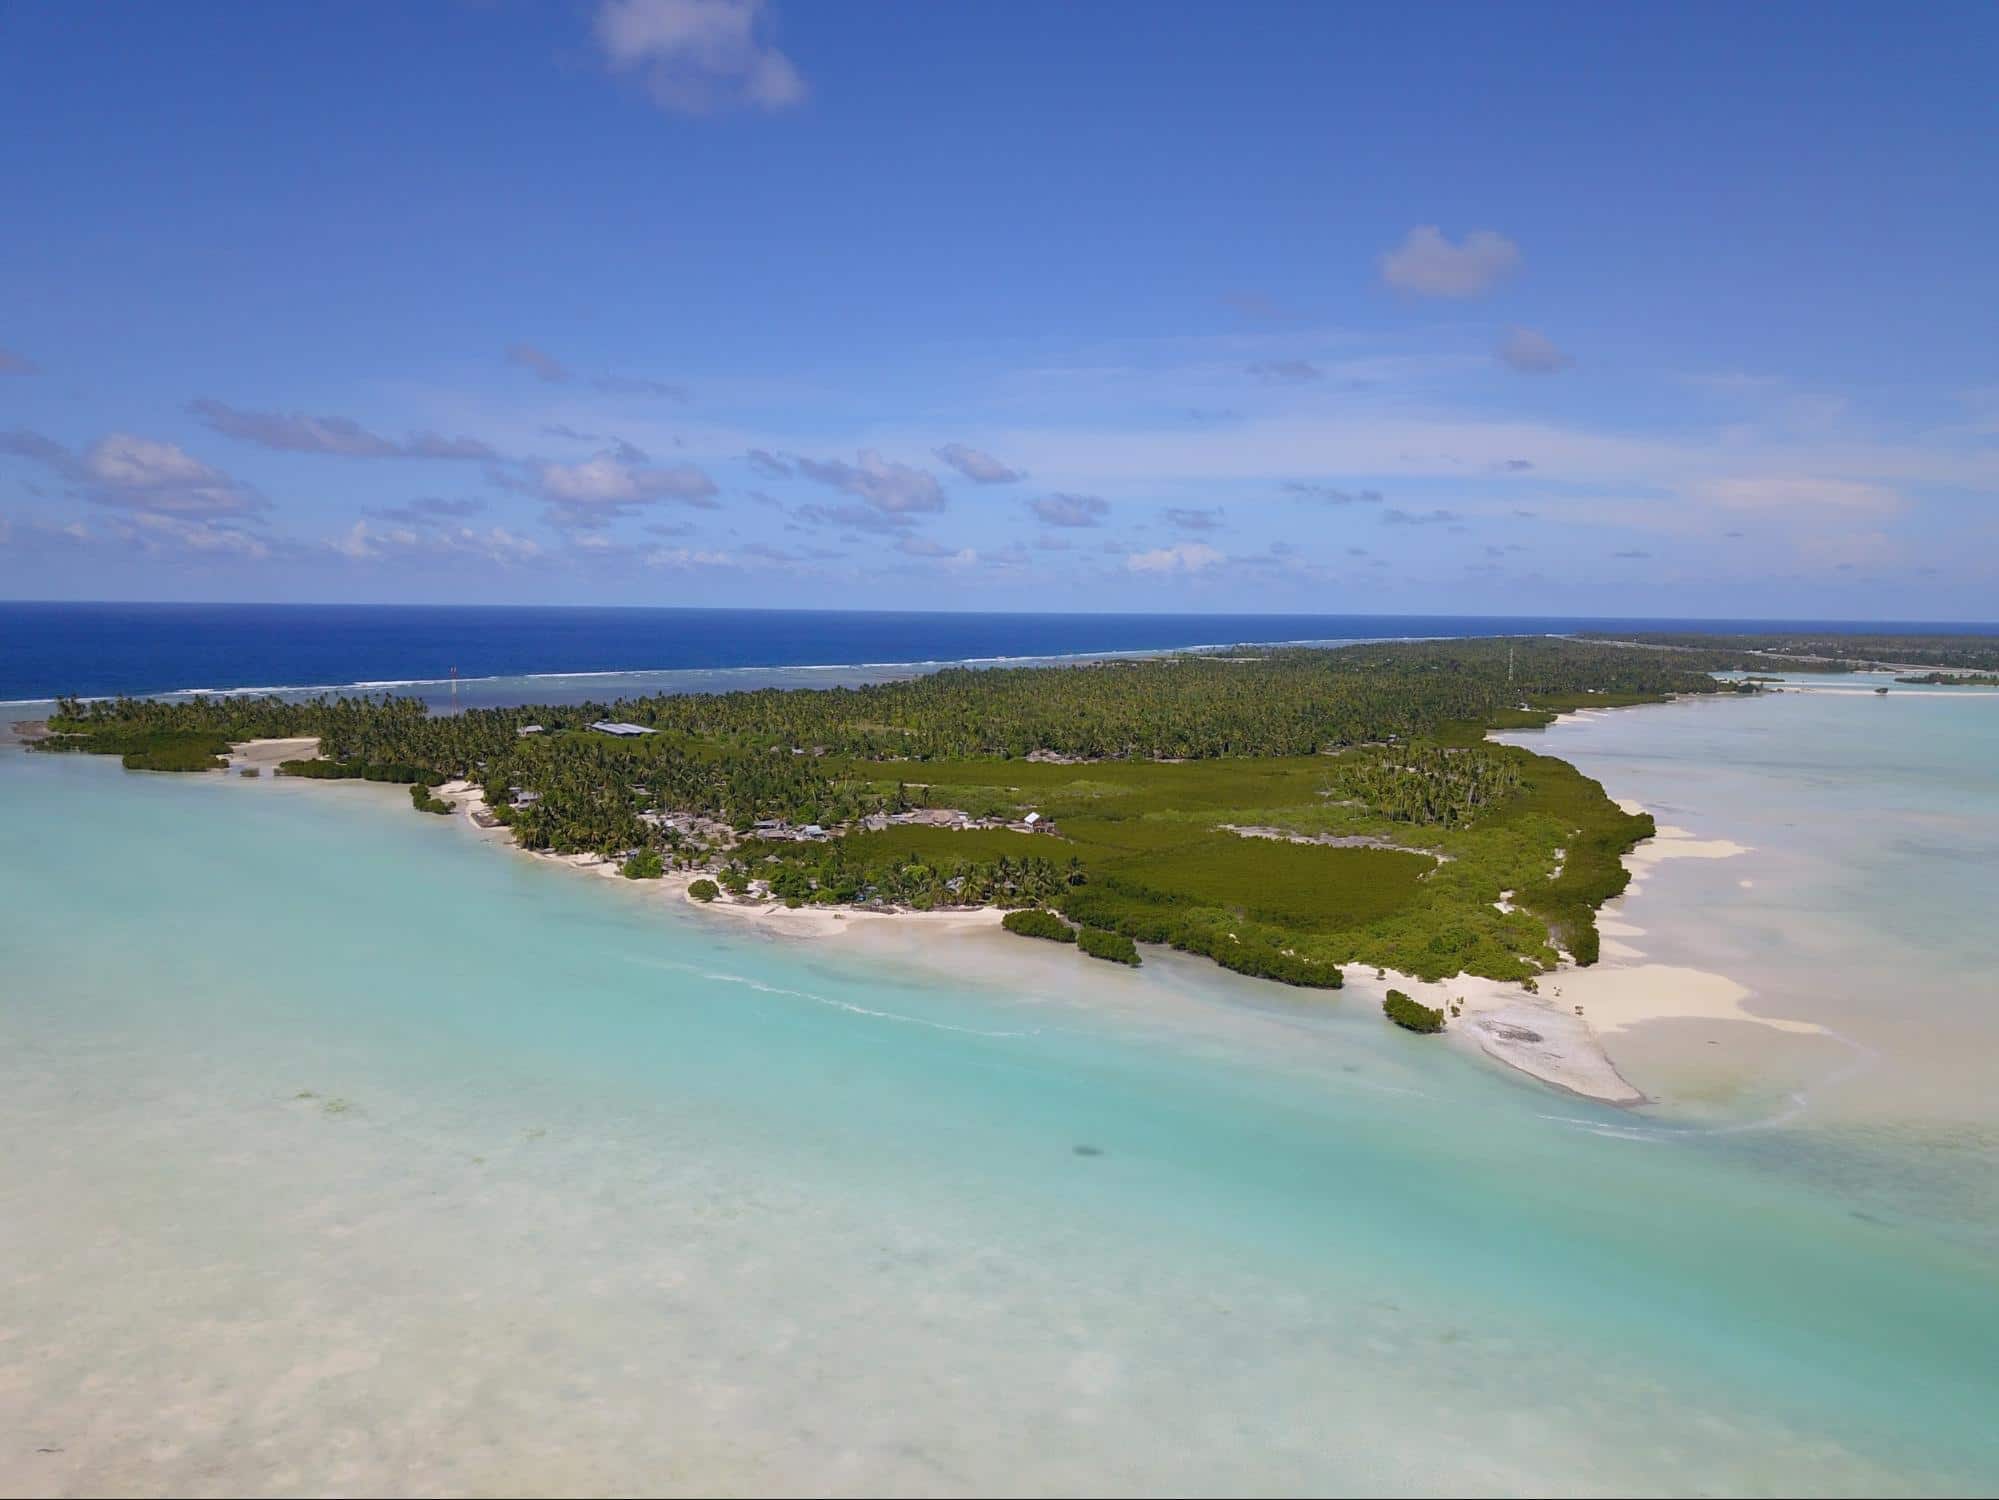 The clear and clean waters of Kiribati